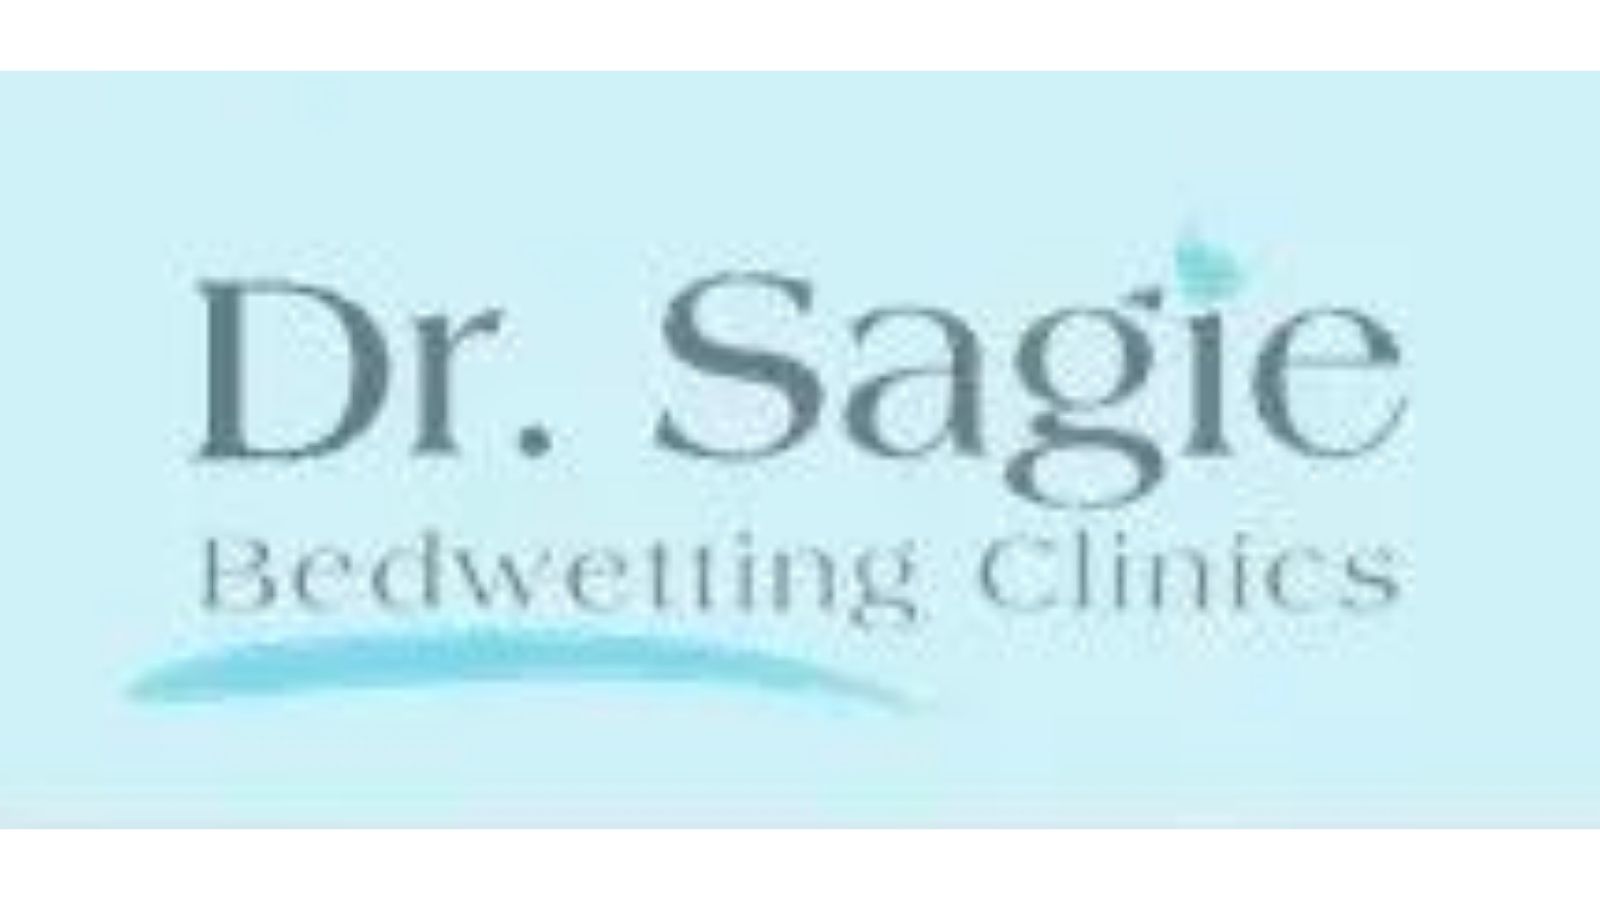  Therapee by Dr.Sagie—在线家用尿床治疗解决方案